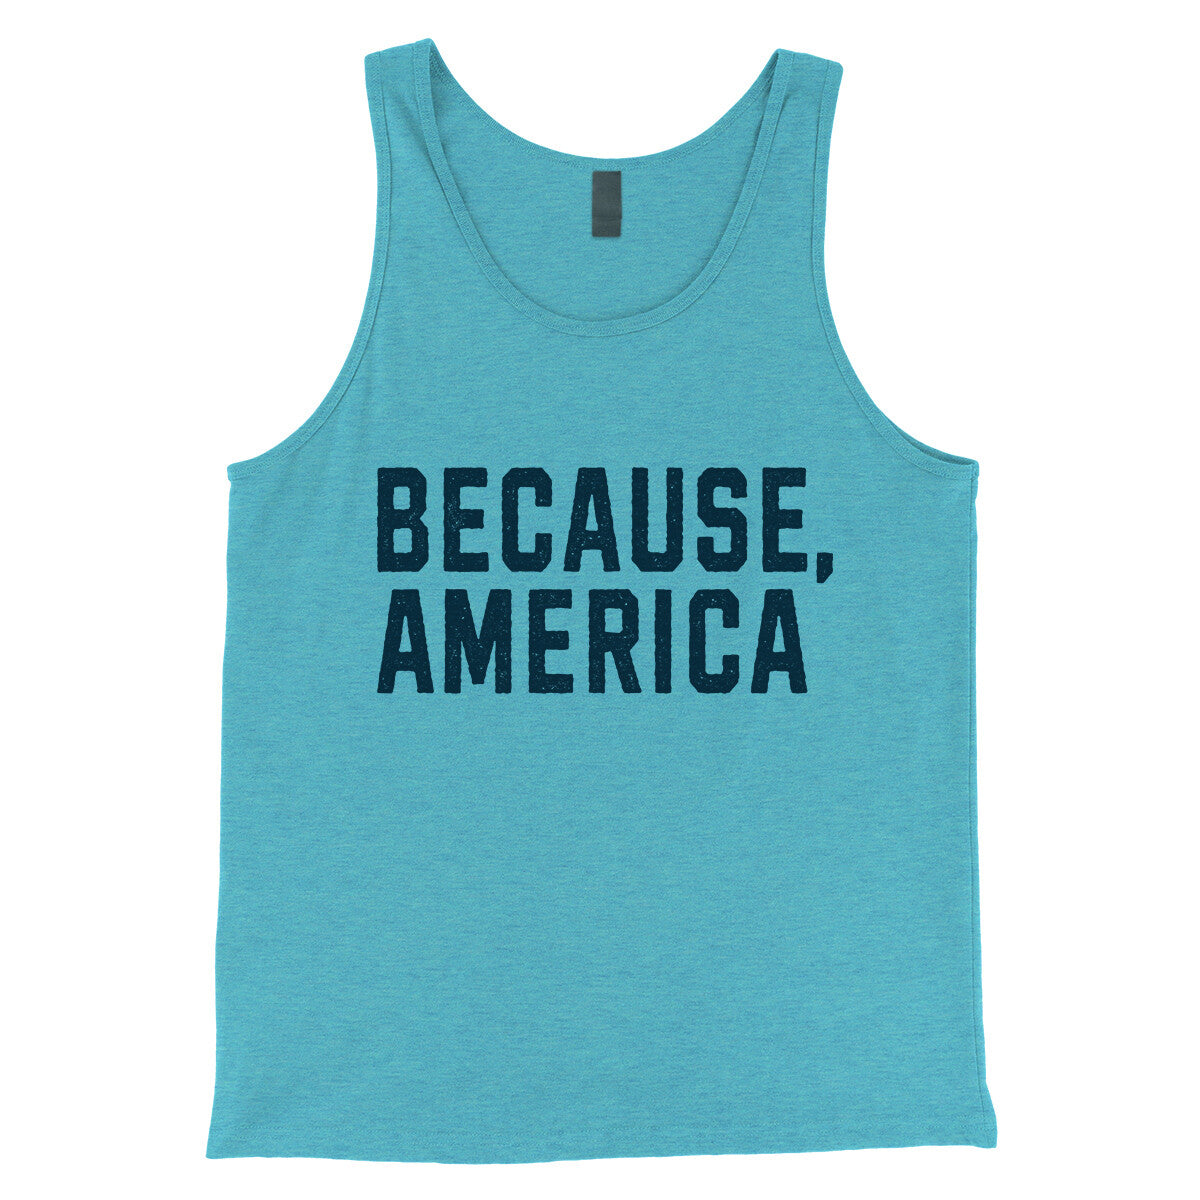 Because America in Aqua Triblend Color